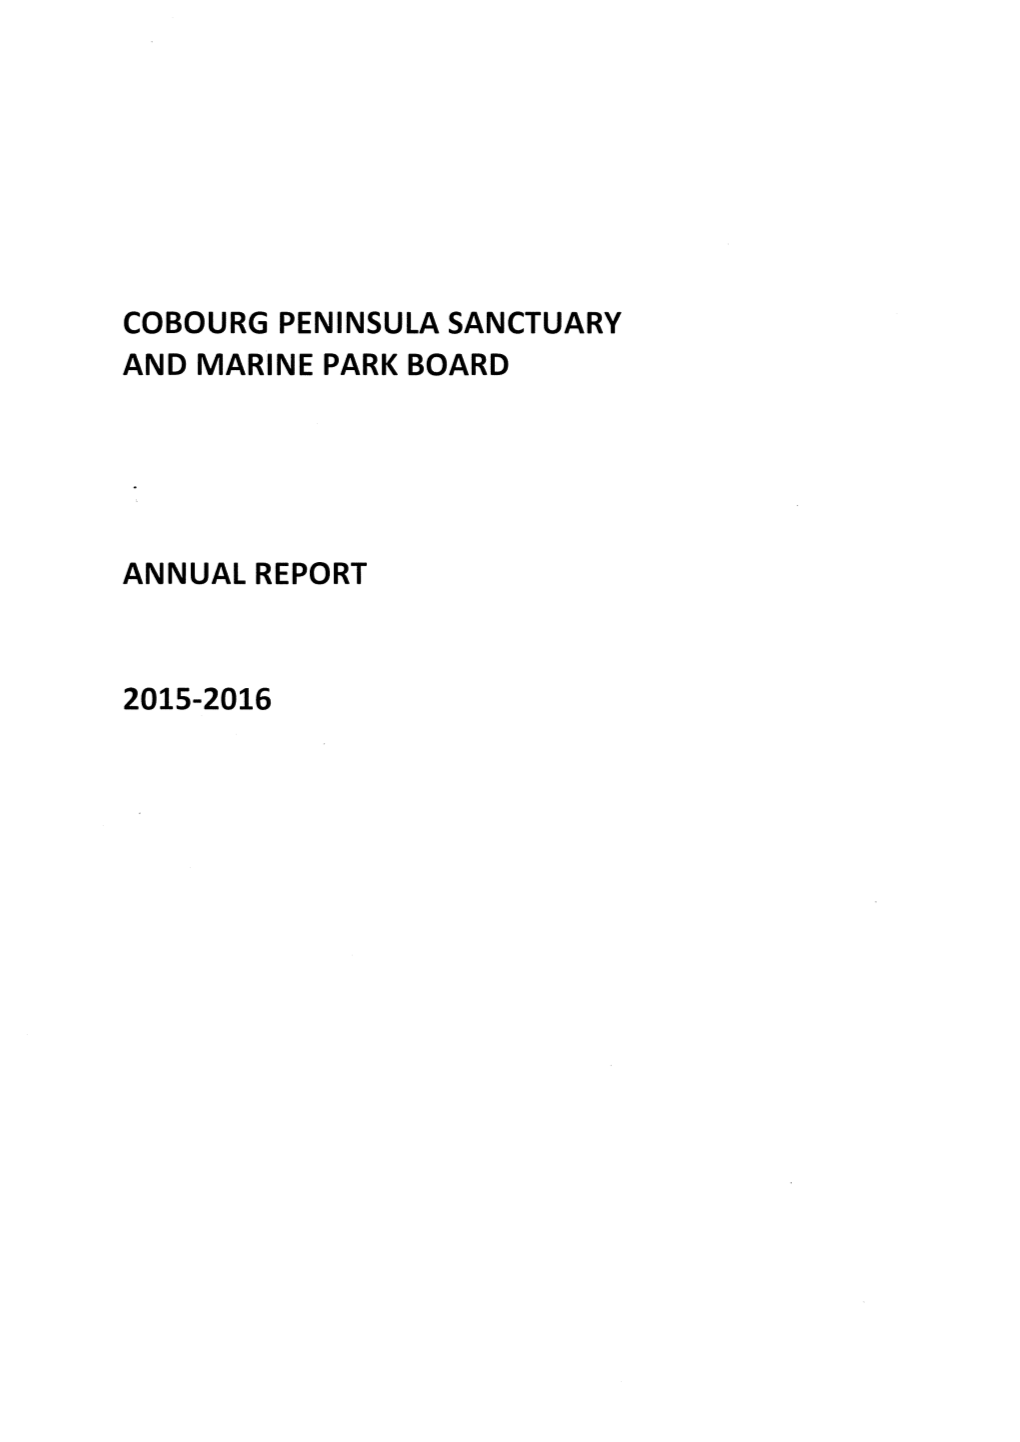 Cobourg Peninsula Sanctuary and Marine Park Board